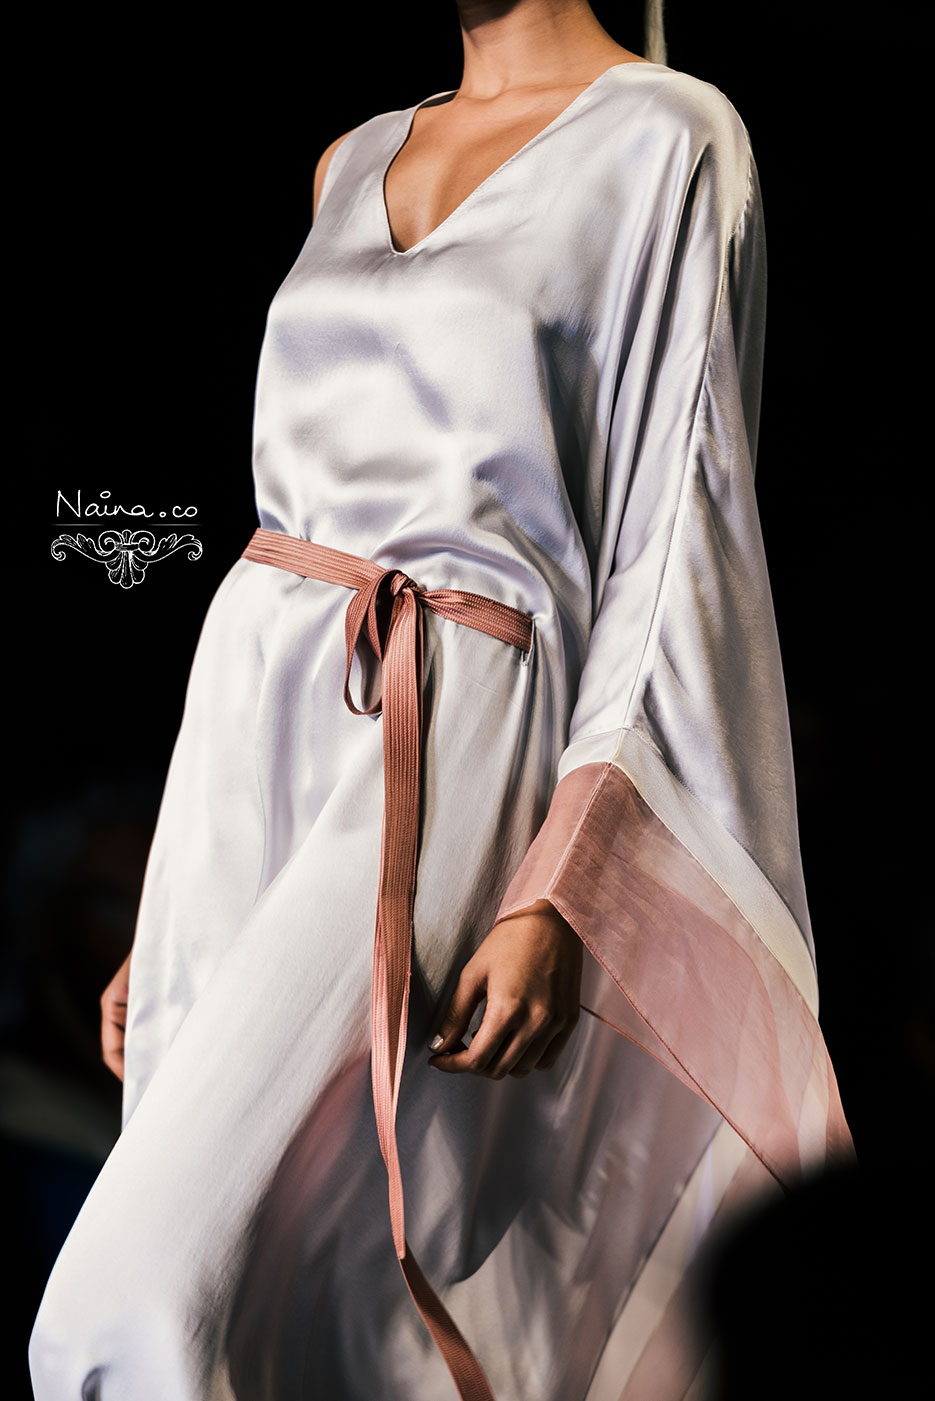 Wills Lifestyle India Fashion Week, Spring Summer 2013. Wendell Rodricks by photographer Naina Redhu of Naina.co